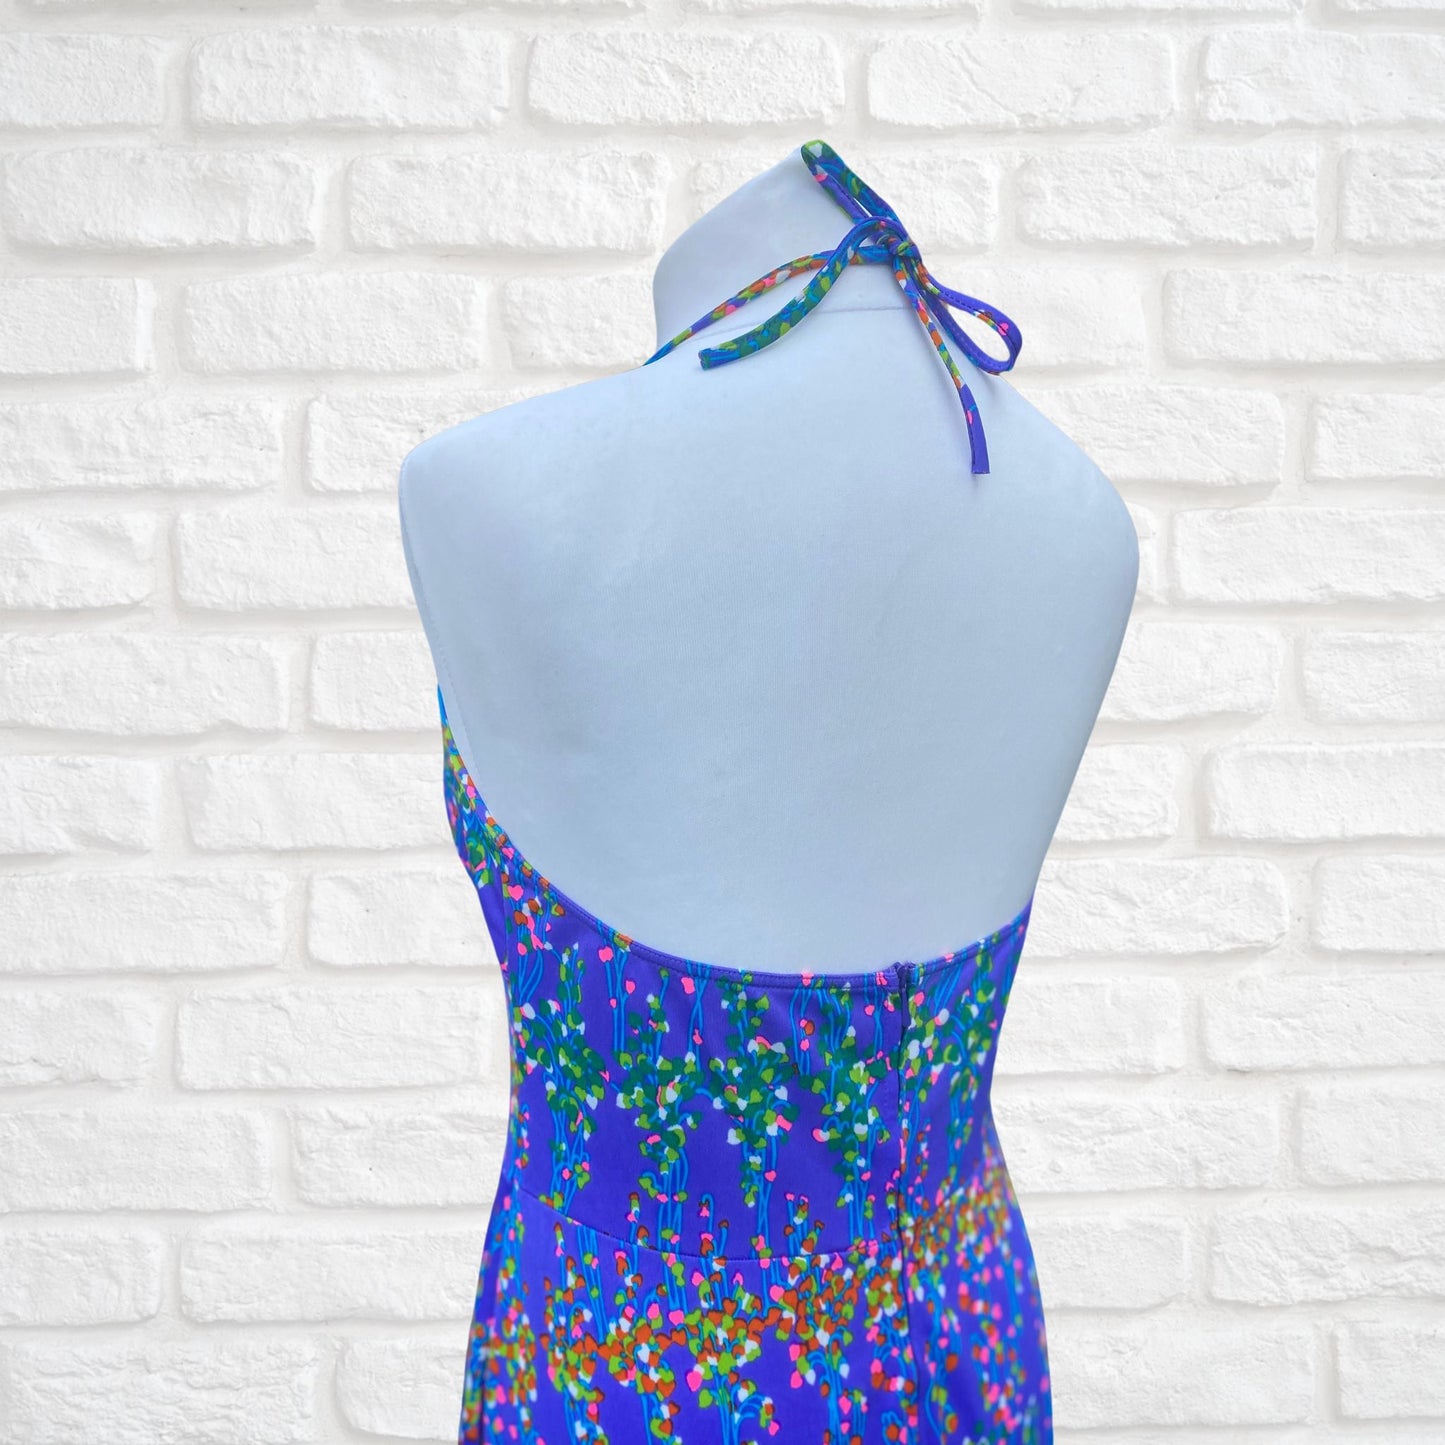 70s rainbow abstract print halter neck dress. Approx U.K. size 10-12